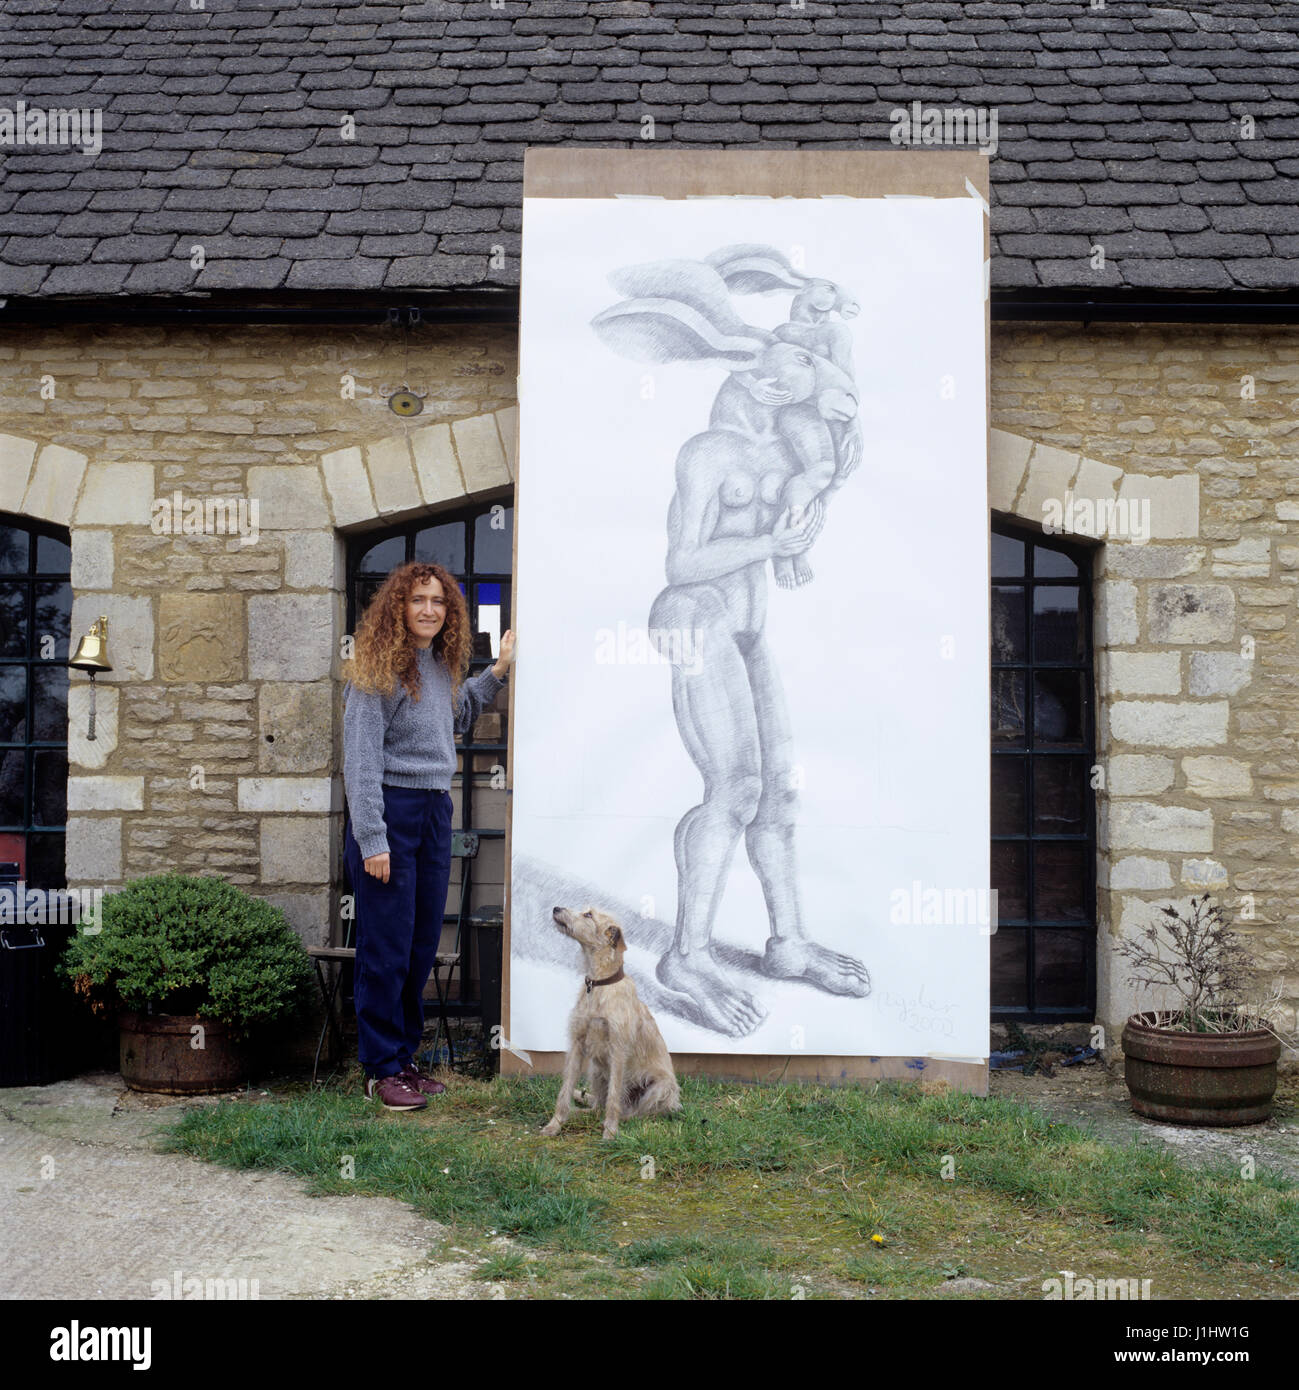 Woman standing by illustration of rabbit-human hybrid. Stock Photo